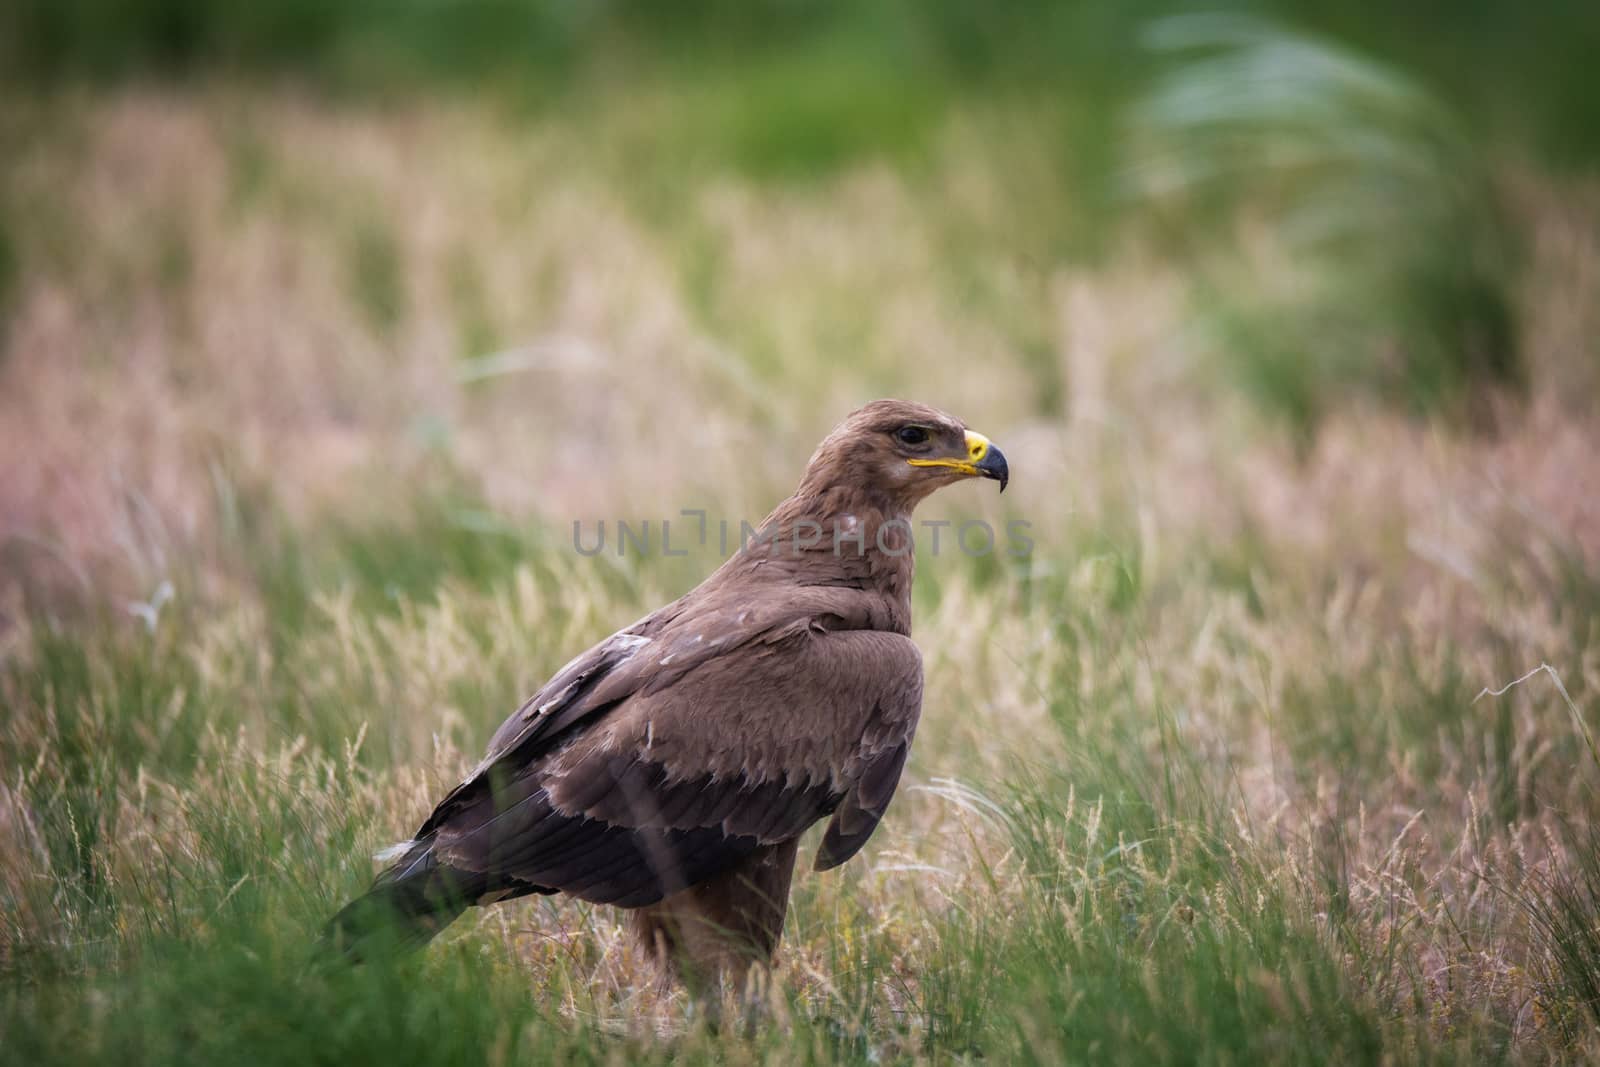 Steppe eagle / Aquila nipalensis. Chyornye Zemli (Black Lands) Nature Reserve,  Kalmykia region, Russia.